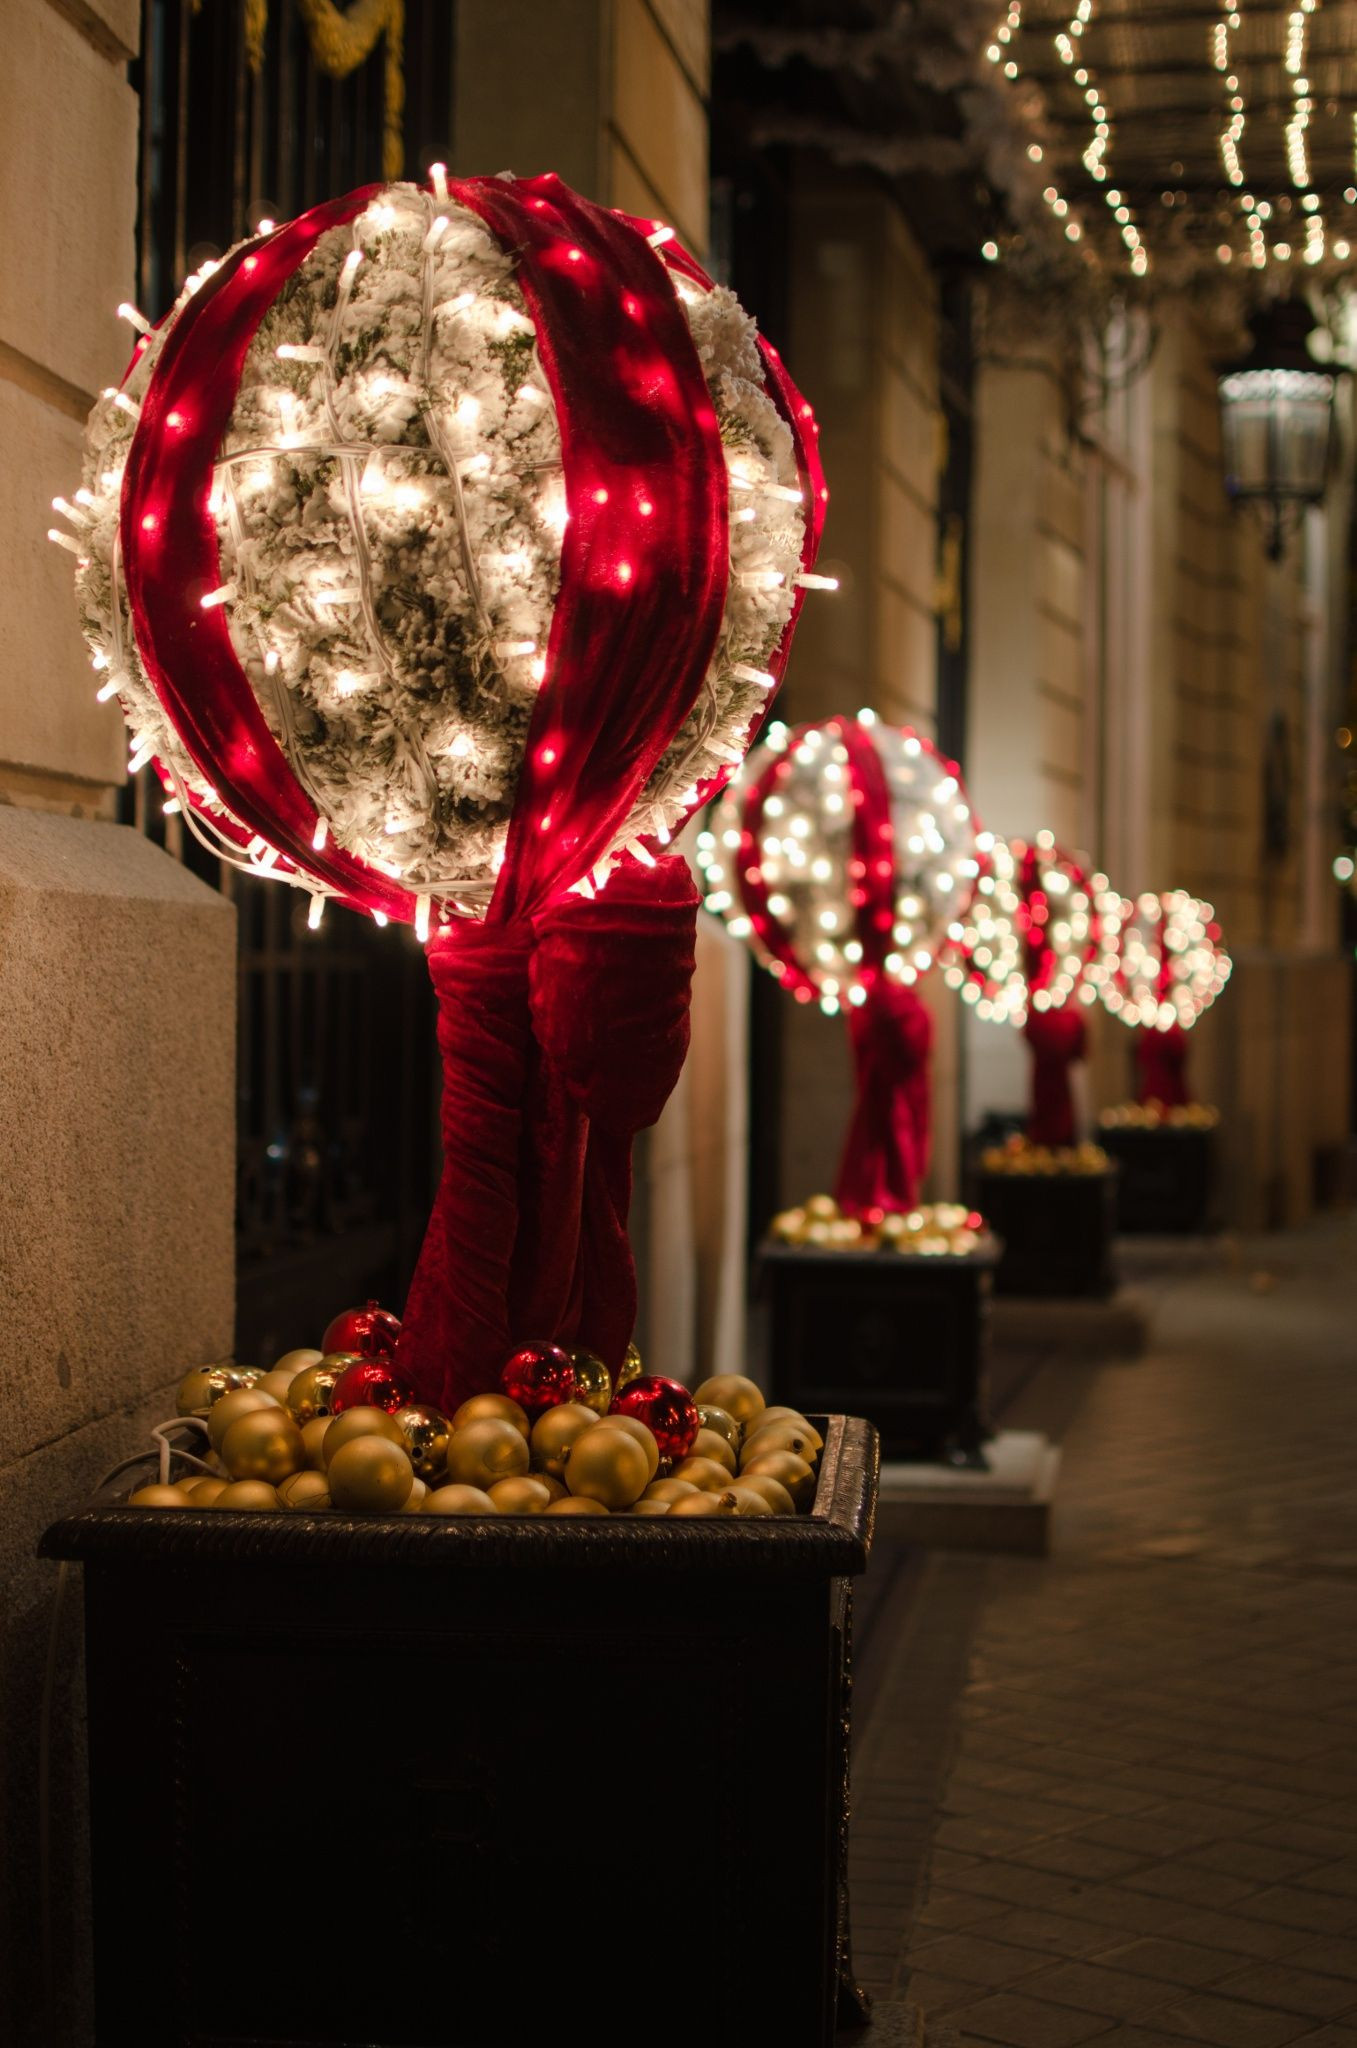 Outdoor Christmas Tree Ornaments
 Christmas lights by Walter Degirolmo on 500px